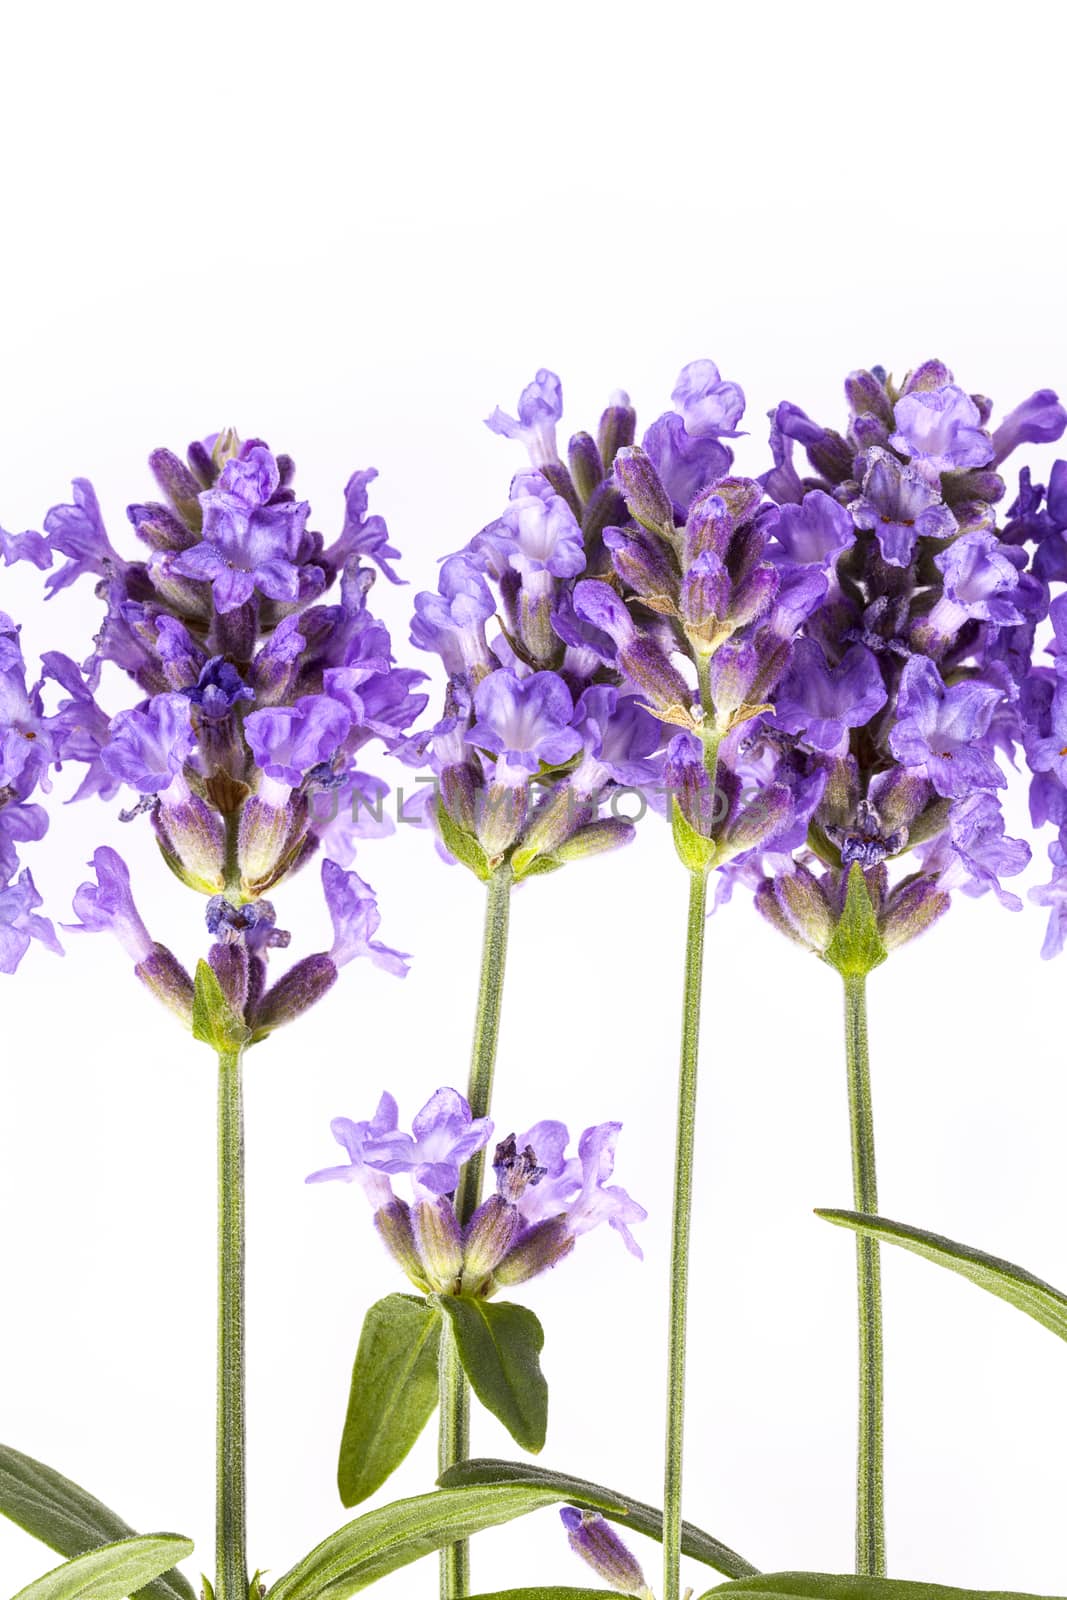 Violet  lavendula flowers on white background, close up by mychadre77